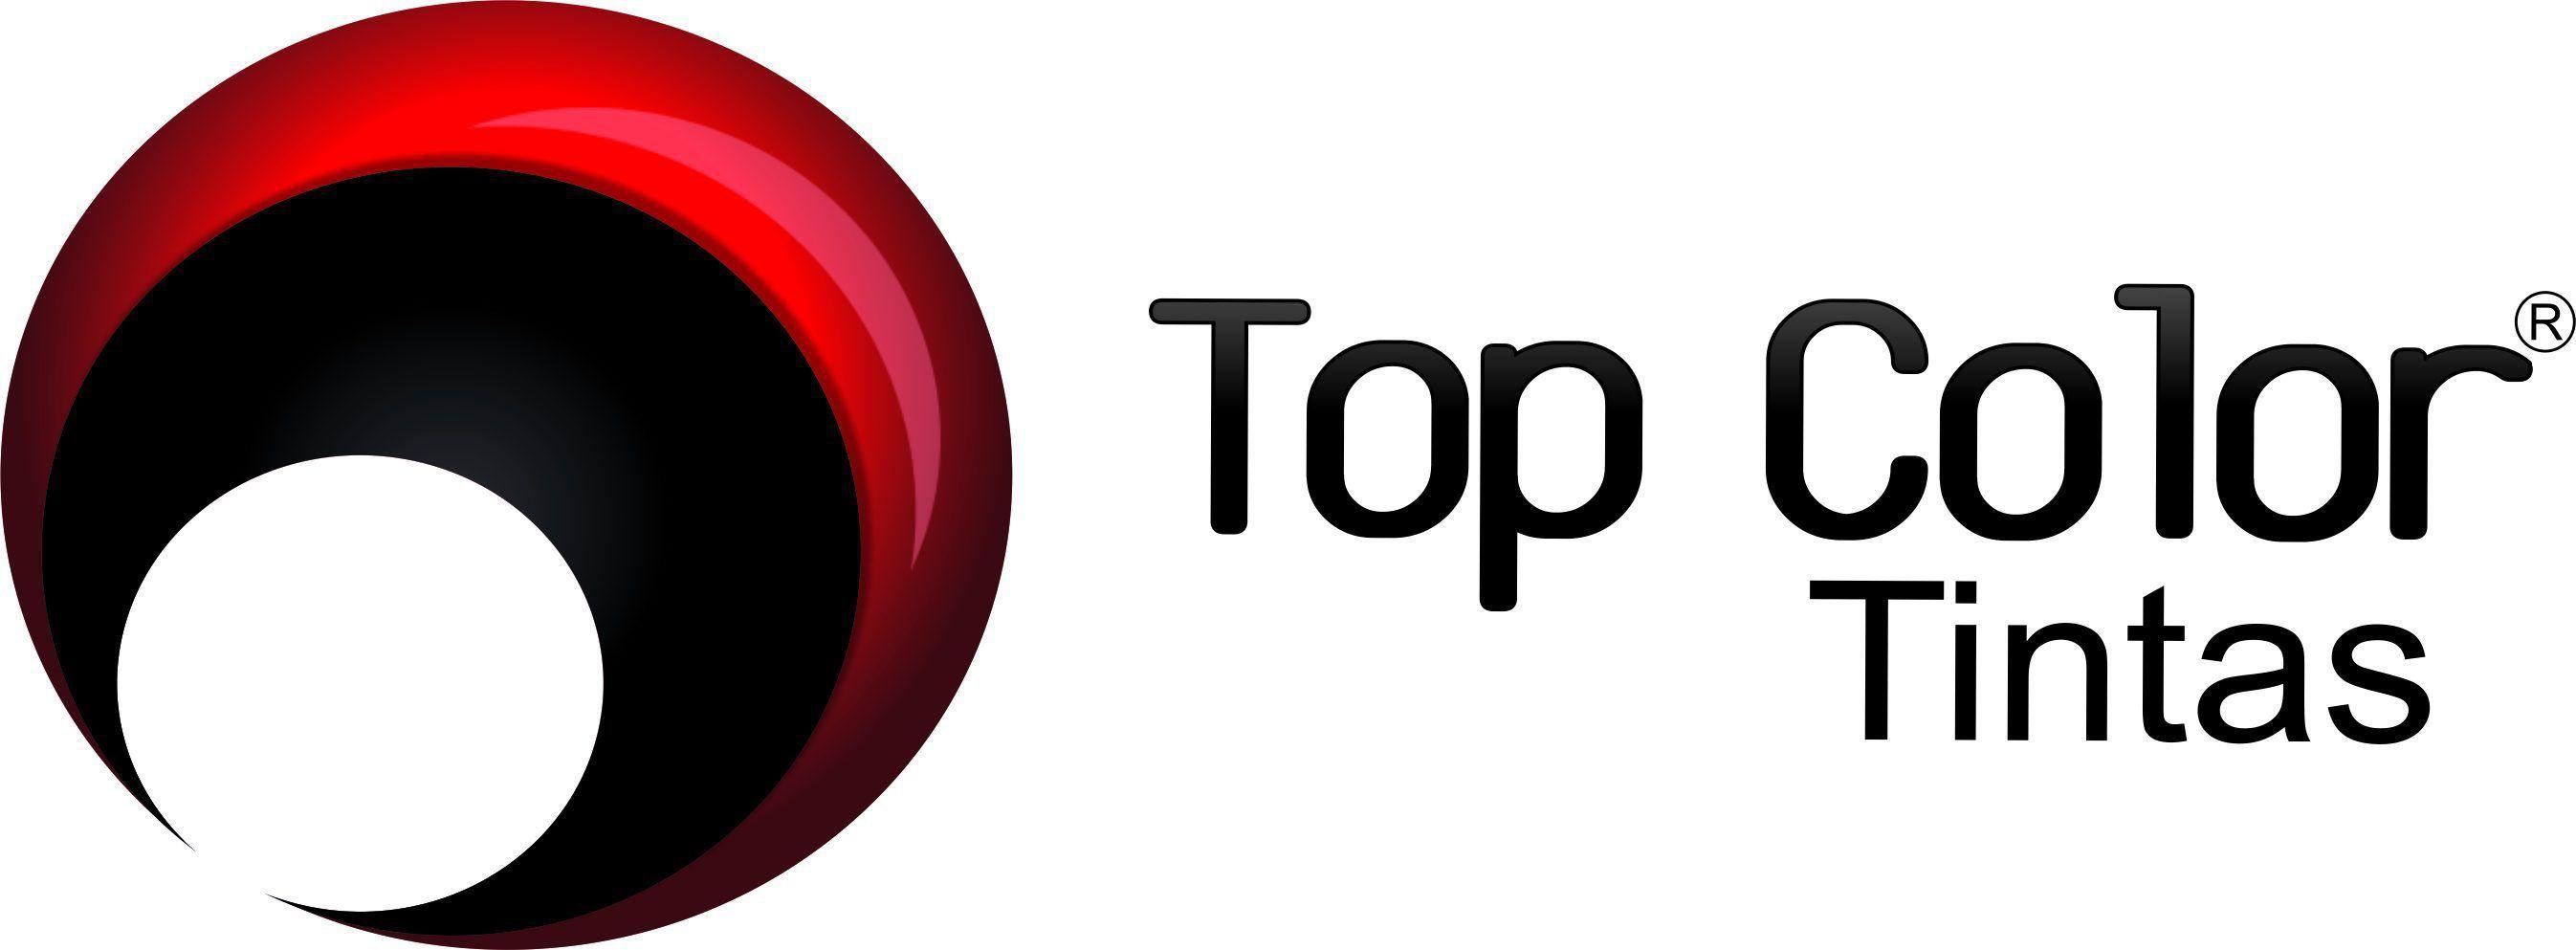 Top Colors for Logo - Whatsapp Da Fábrica 11 97459 1441